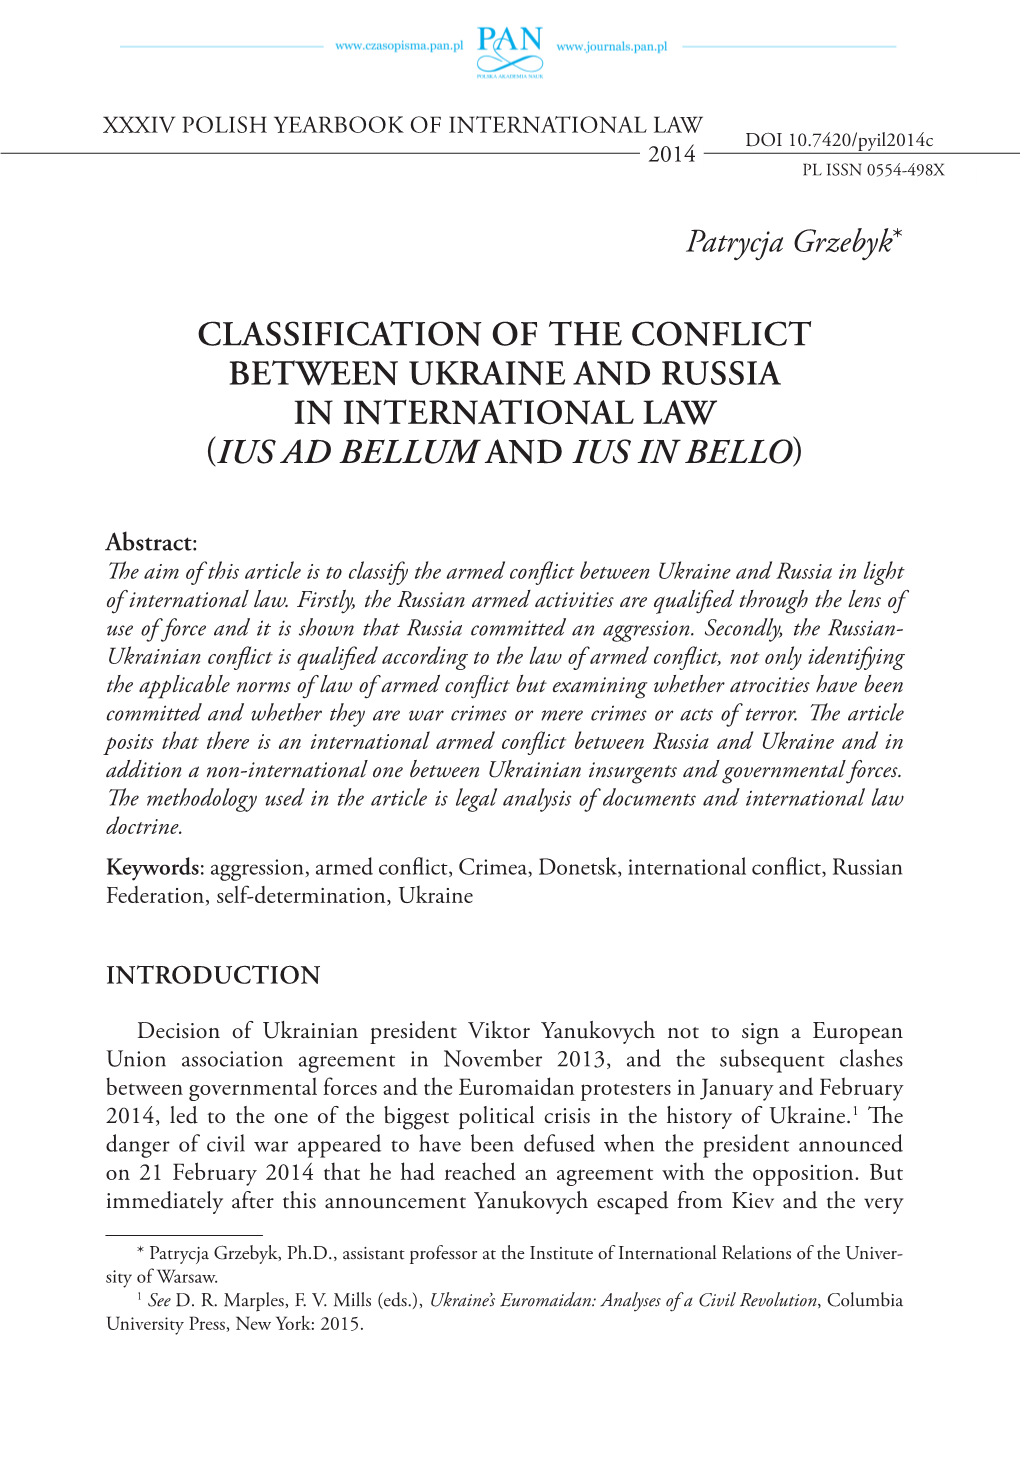 Classification of the Conflict Between Ukraine and Russia in International Law (Ius Ad Bellum and Ius in Bello)